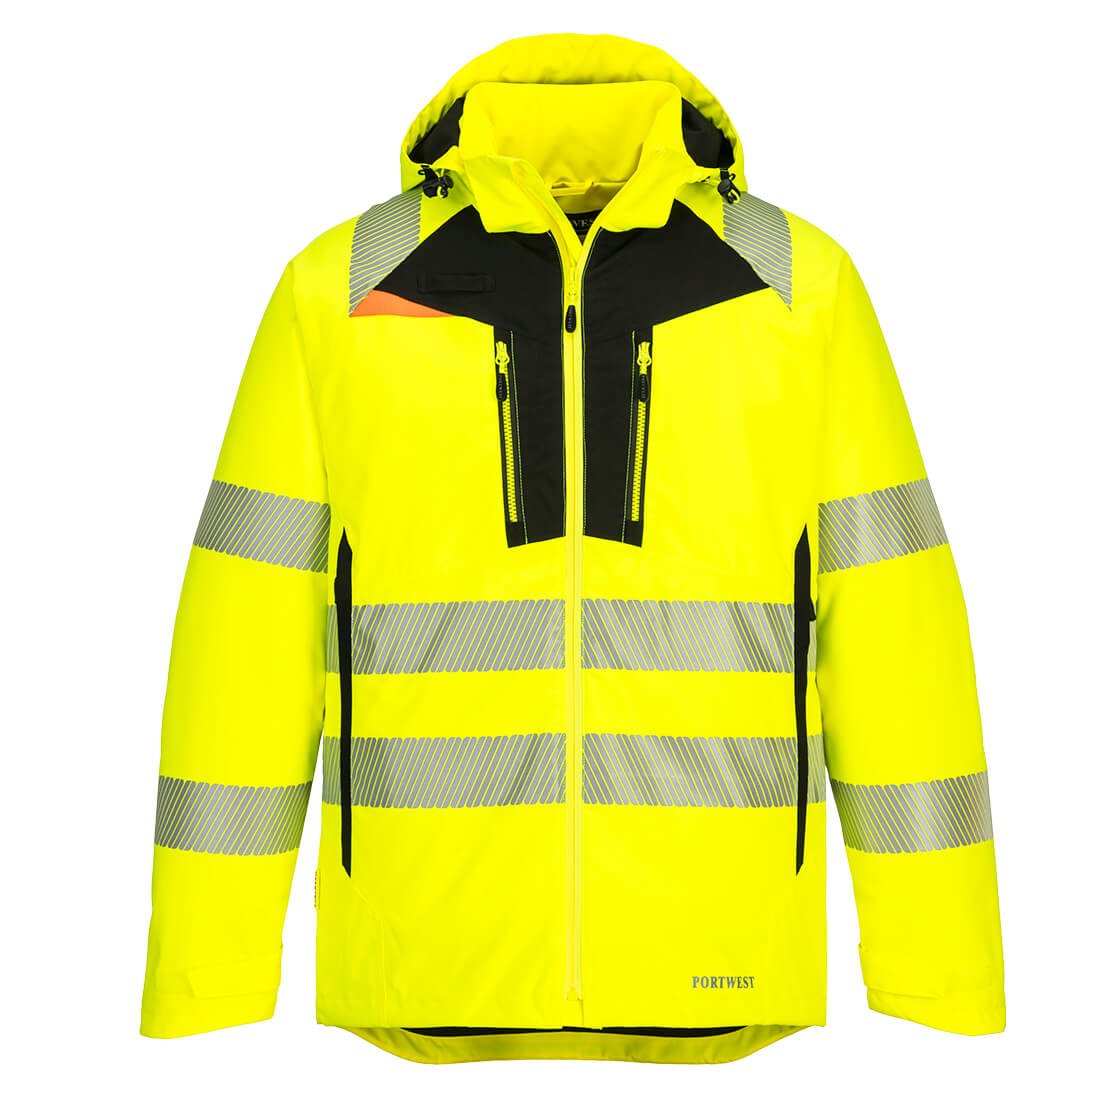 DX4 Hi-Vis Winter Jacket - Yellow/Black